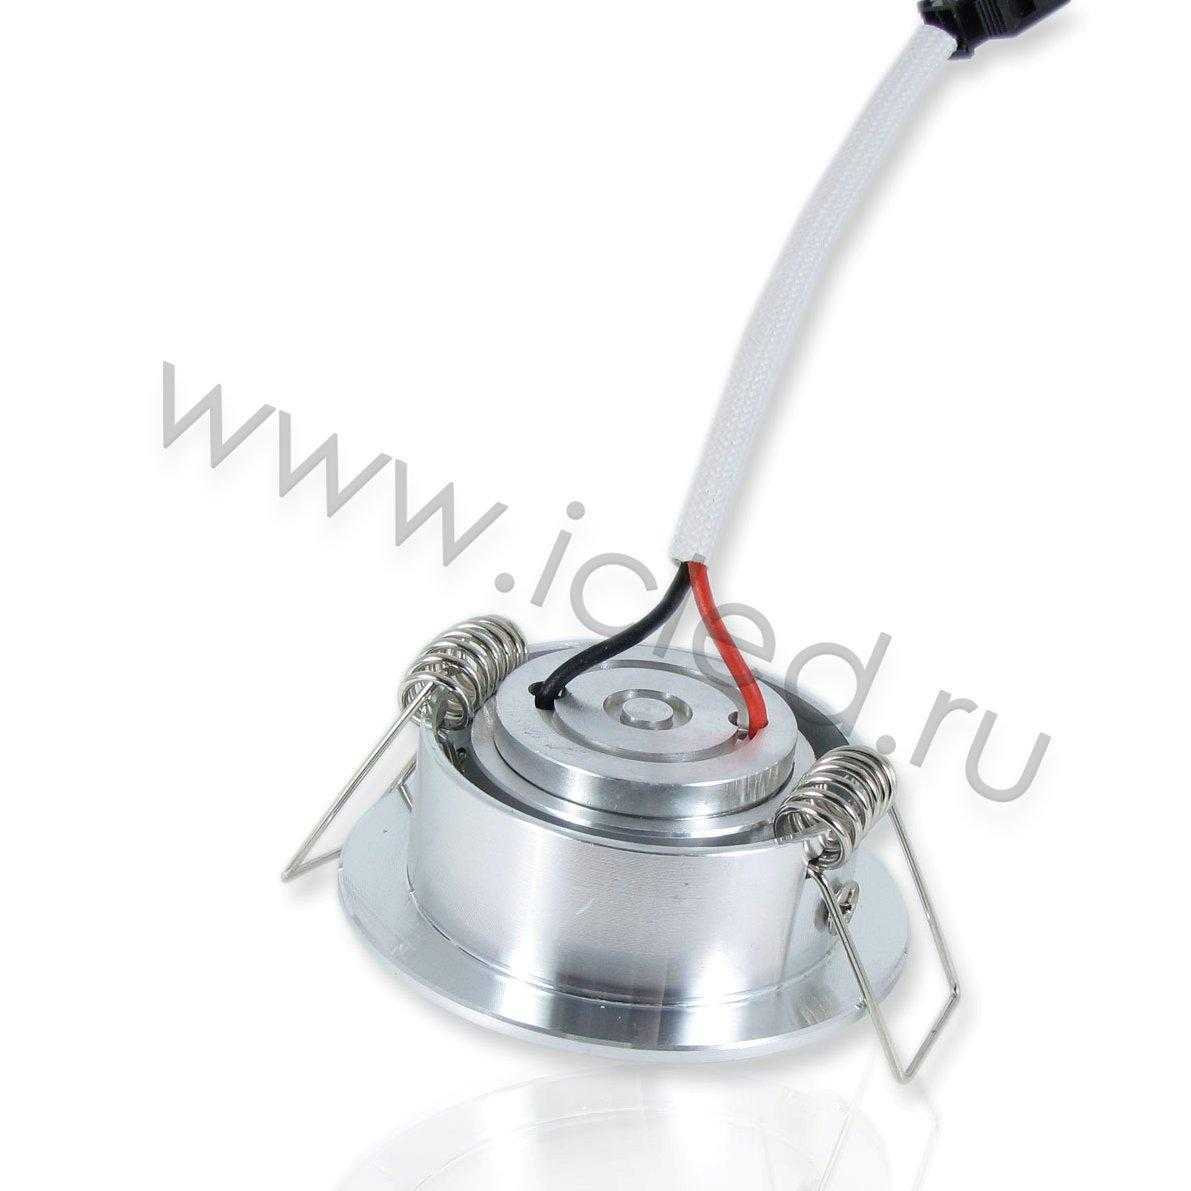 Светодиодные светильники Светодиодный светильник точечный RS SP4 (1W, Warm White)